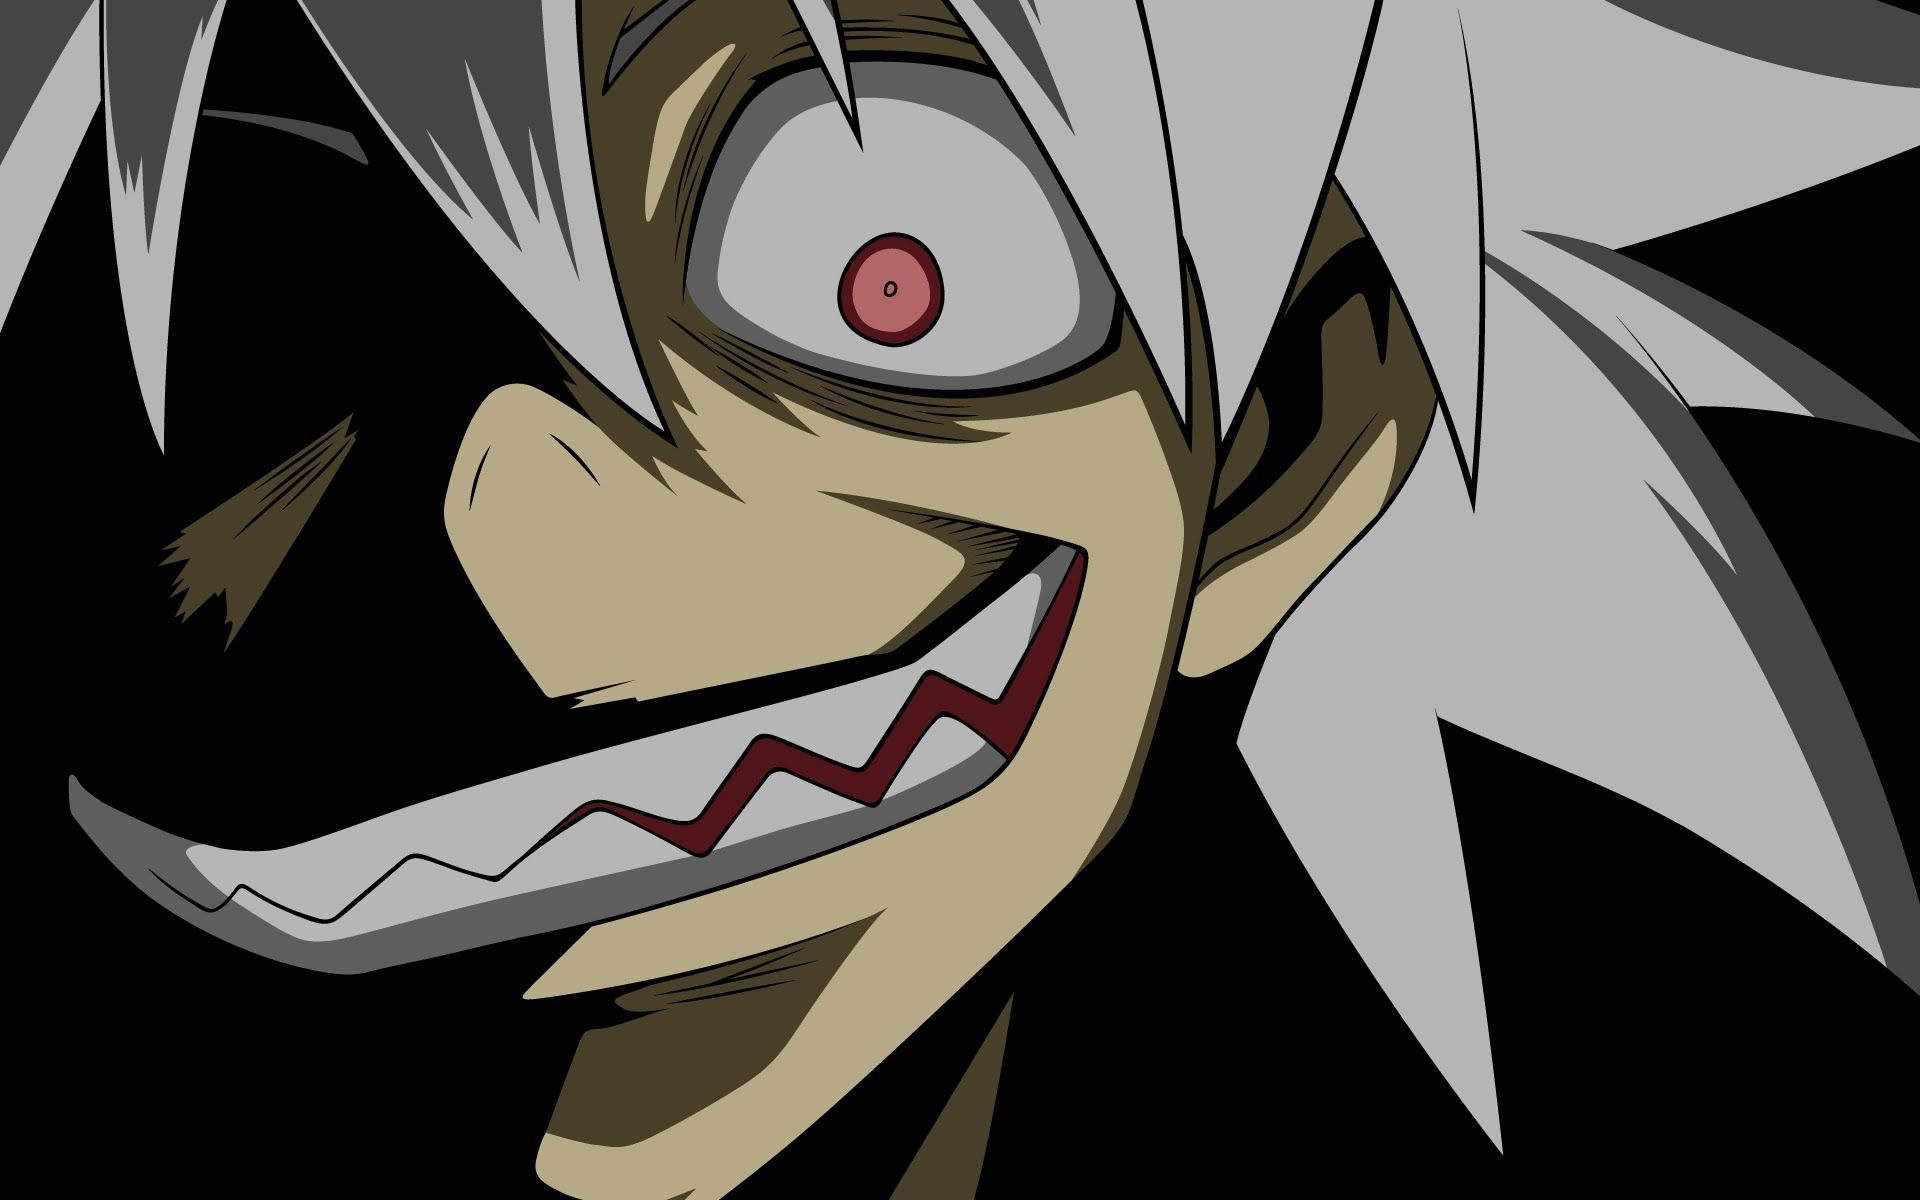 Anime Evil Smile GIFs | Tenor